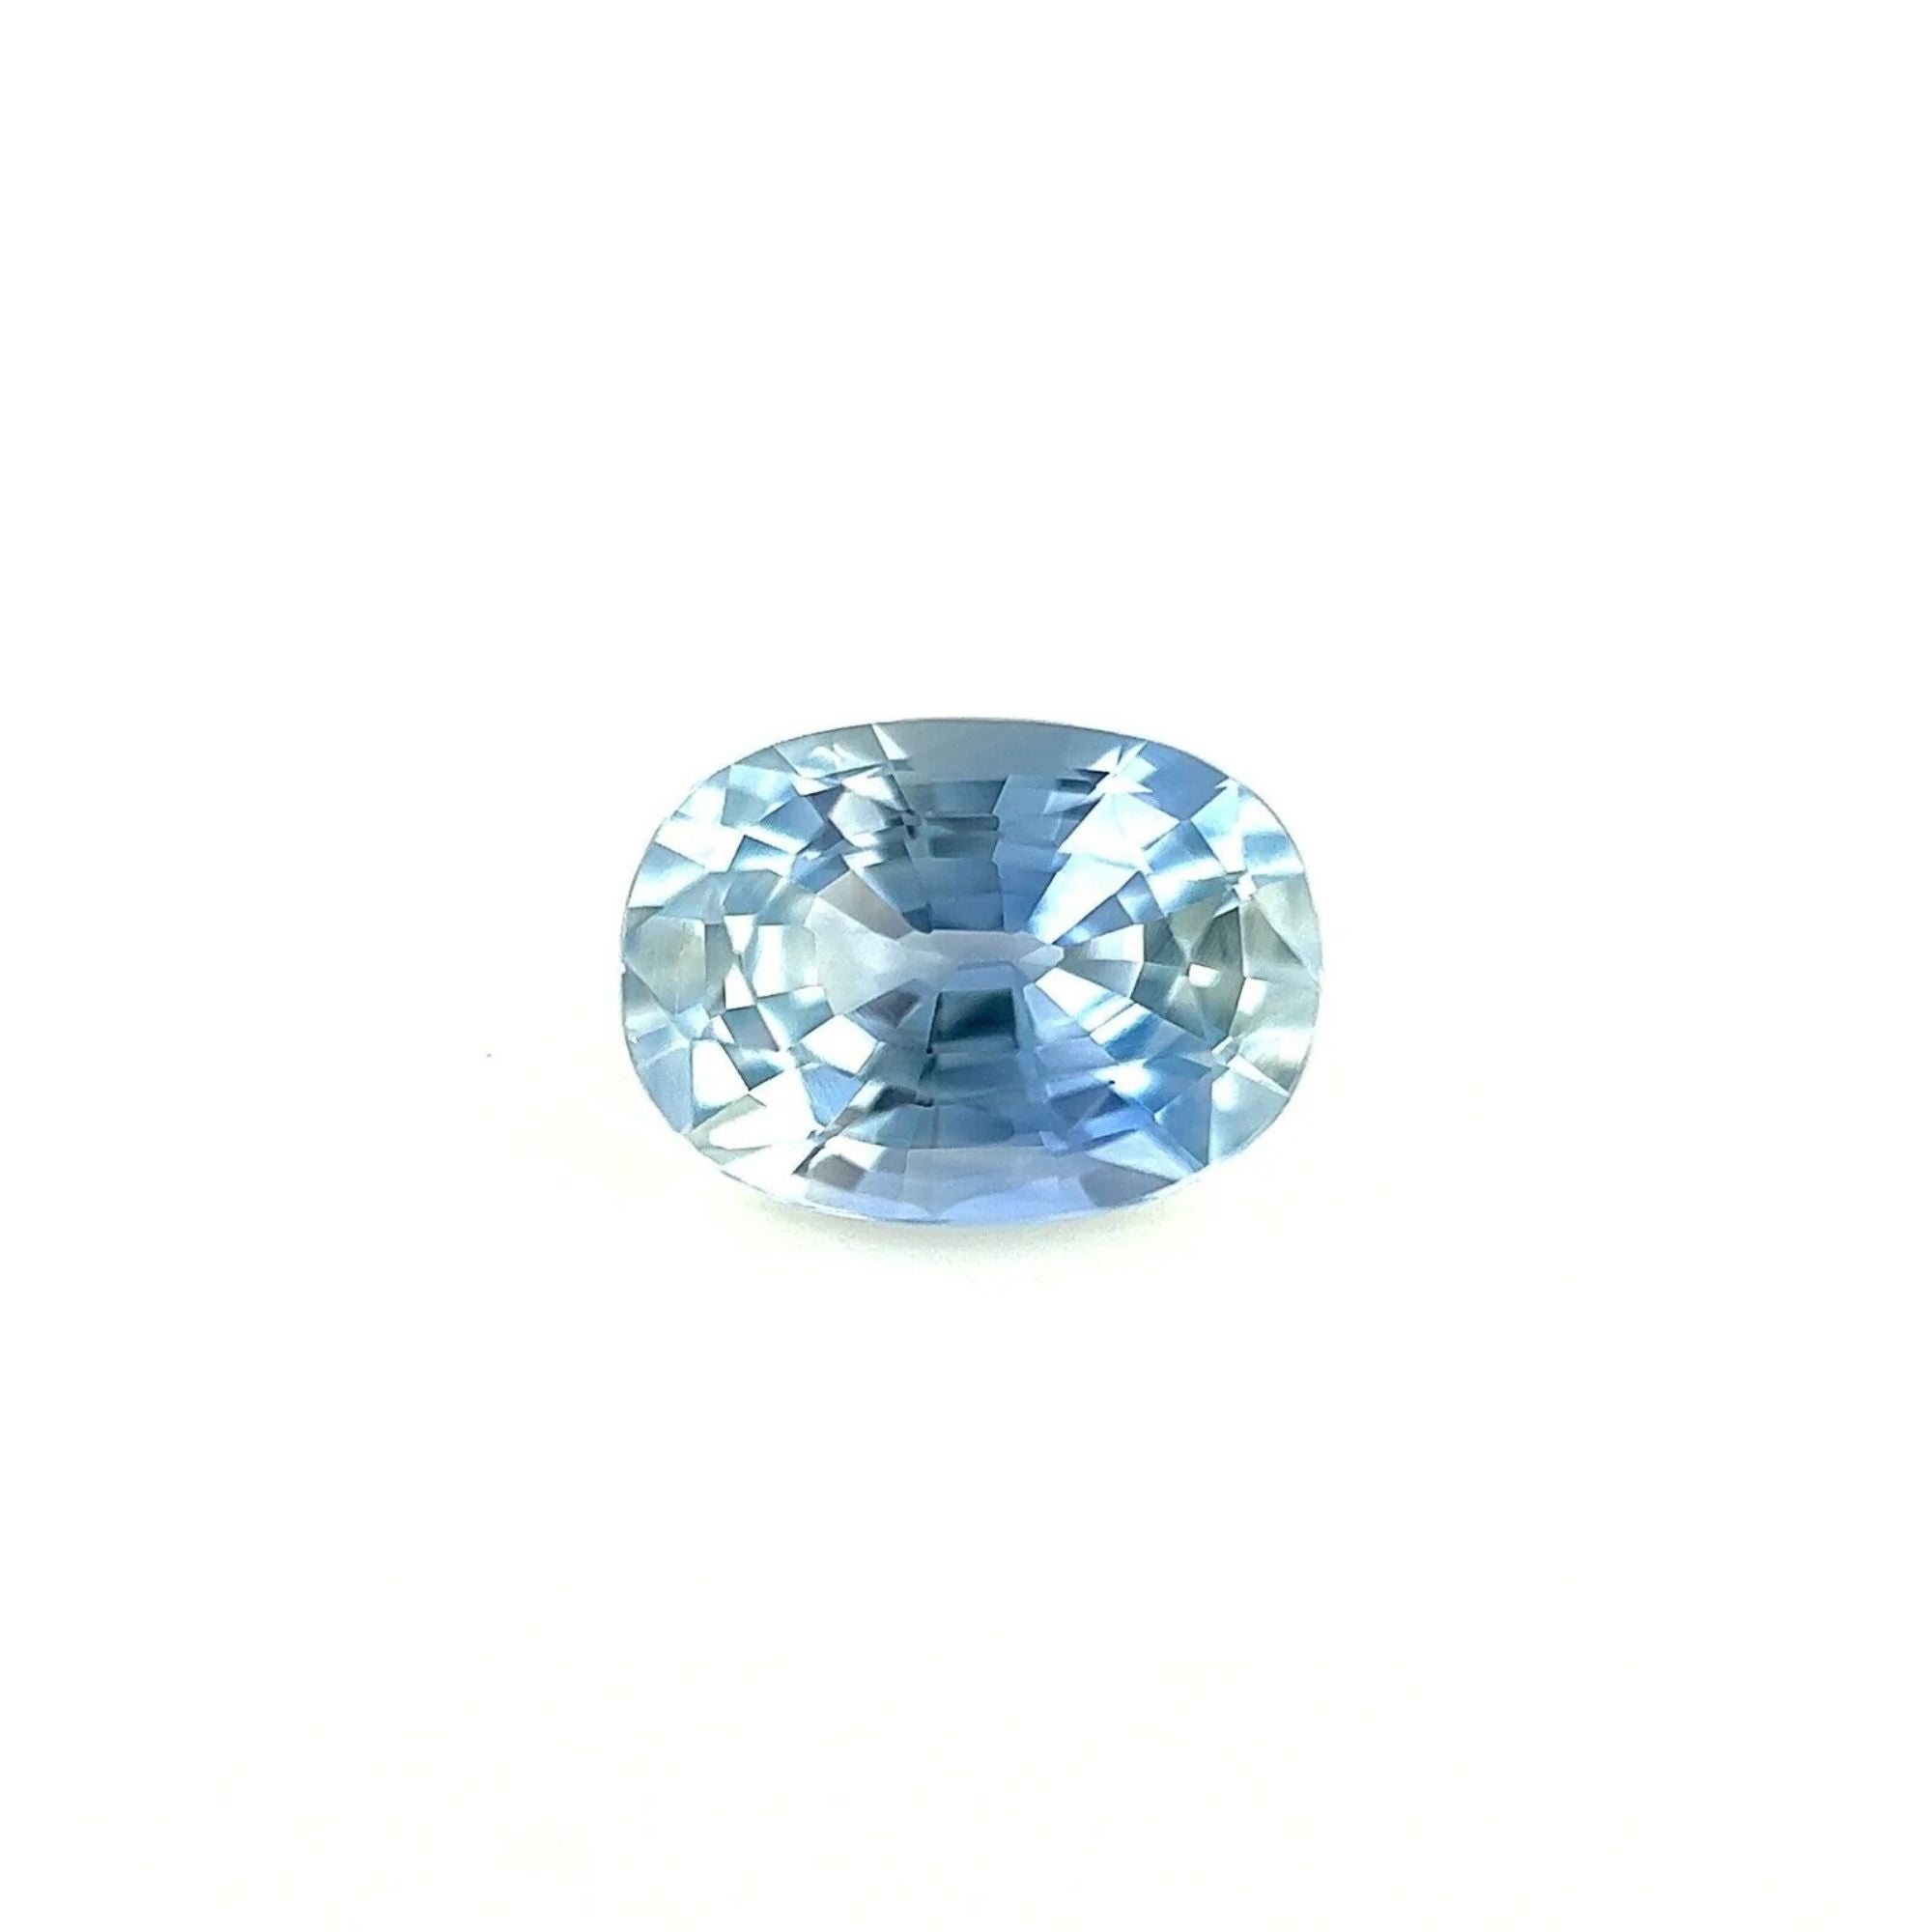 1.13 Carat Light Blue Ceylon Sapphire Oval Cut Loose Rare Gemstone VVS